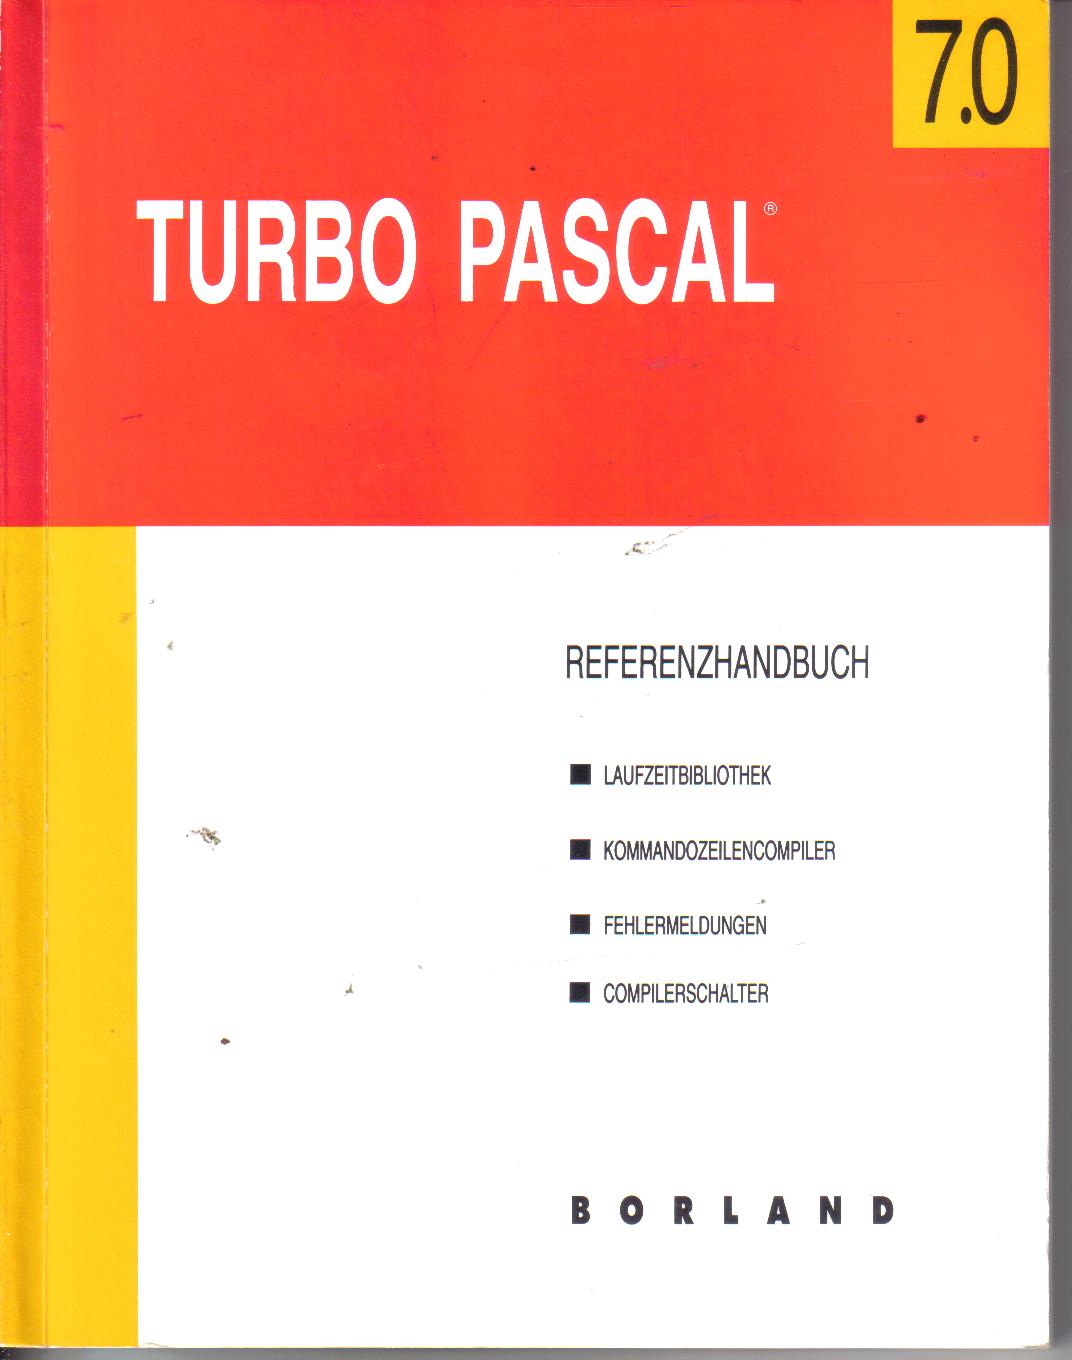 Turbo Pascal 7.0ReferenzhandbuchBorland